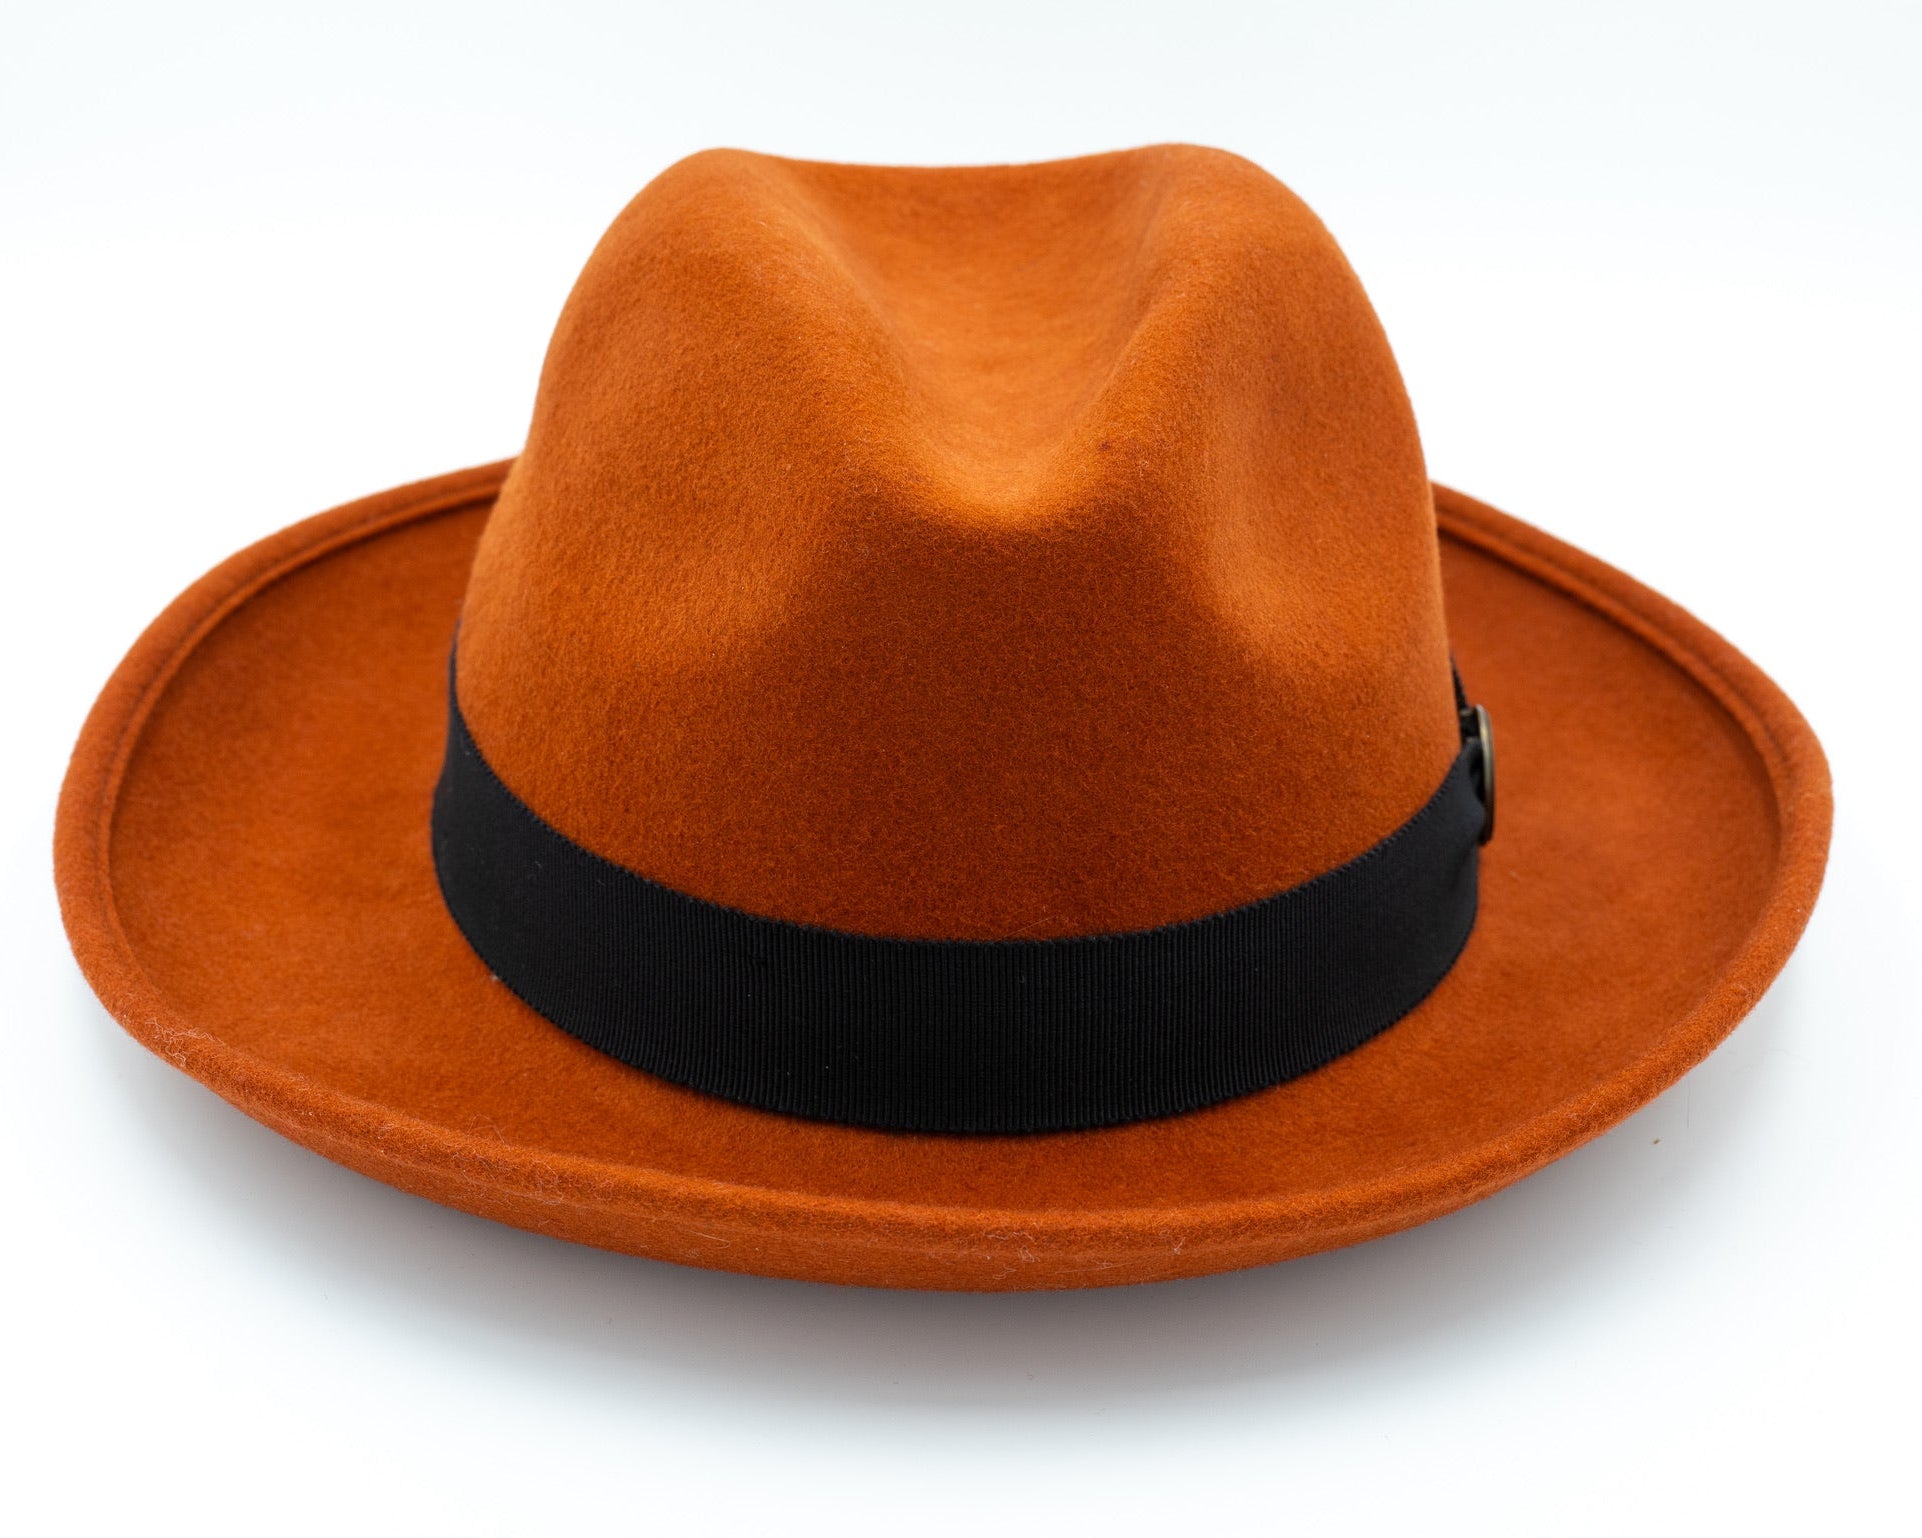 Orangebearstl Fedora Hat in red brick color back